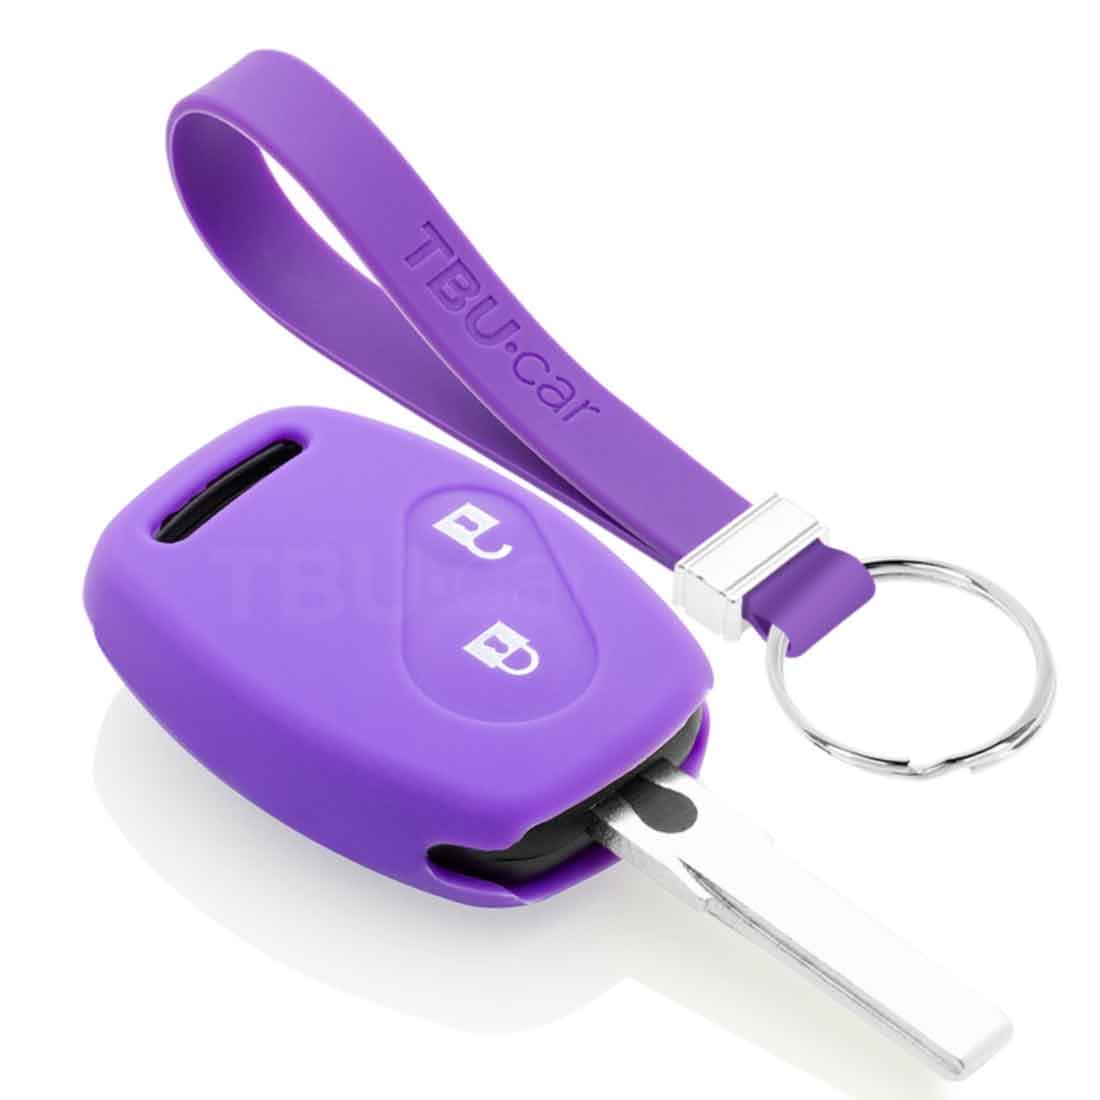 TBU car TBU car Autoschlüssel Hülle kompatibel mit Honda 2 Tasten - Schutzhülle aus Silikon - Auto Schlüsselhülle Cover in Violett